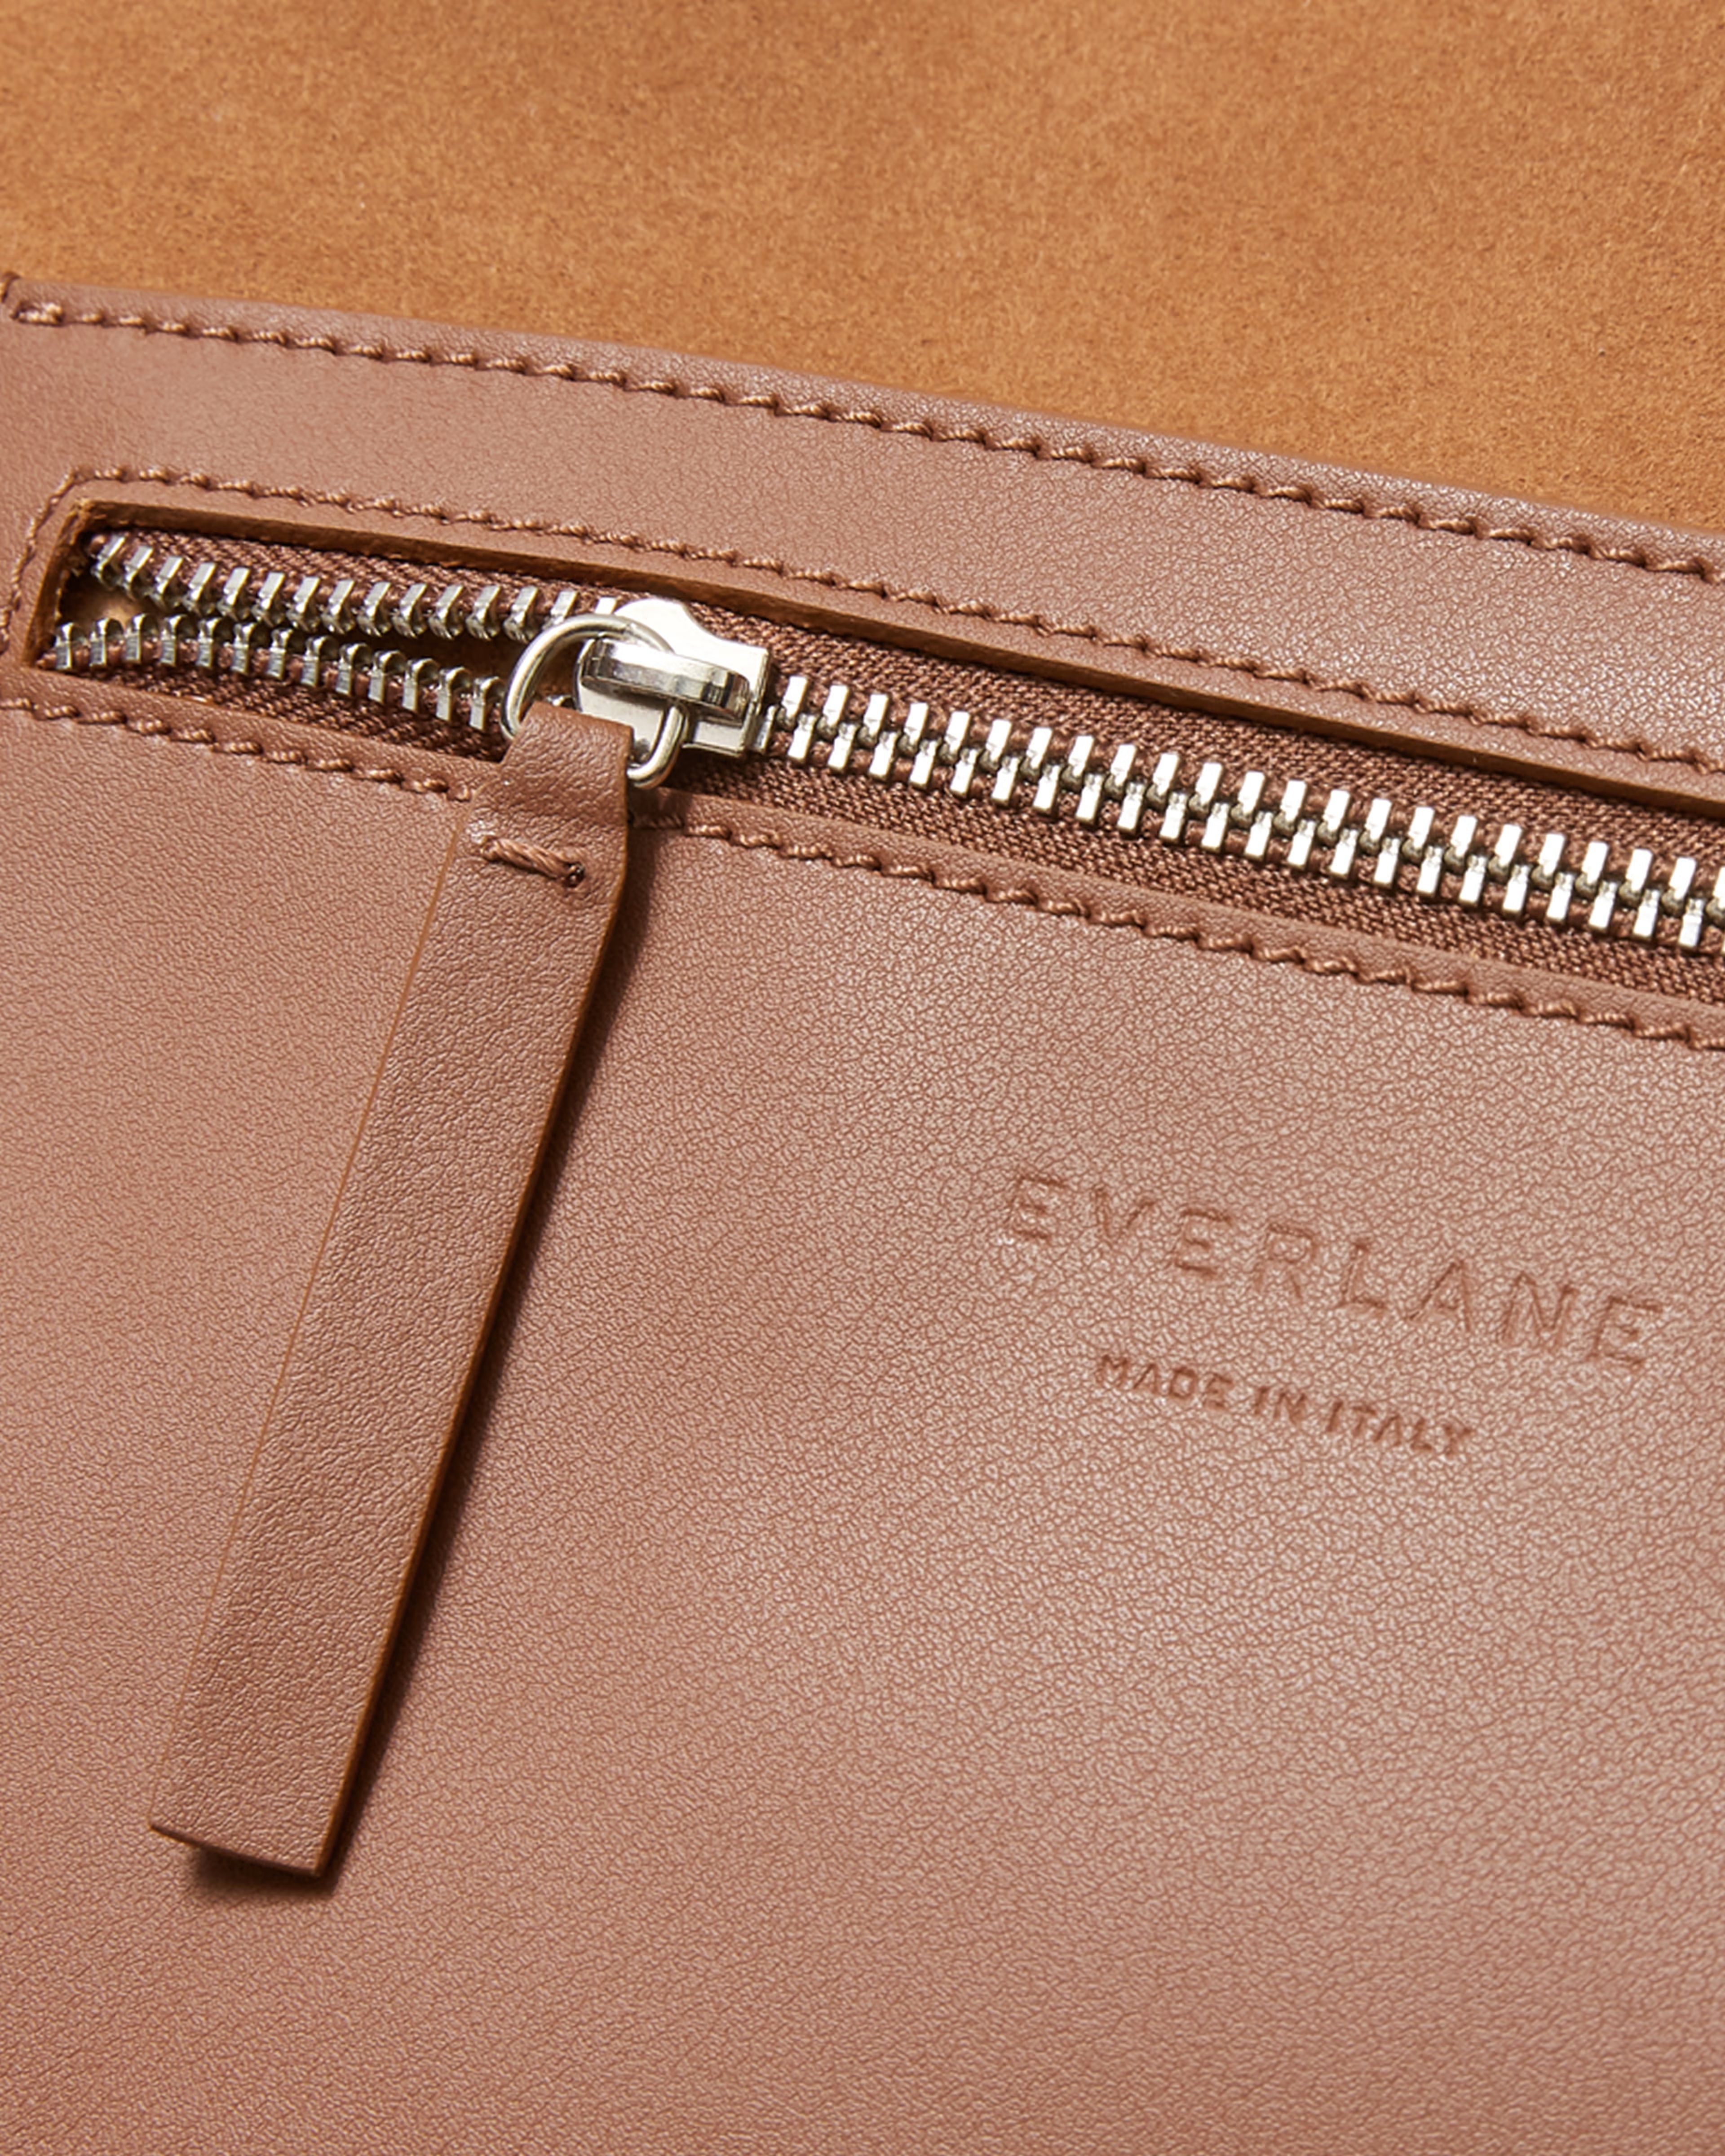 The Italian Leather Studio Bag | Everlane